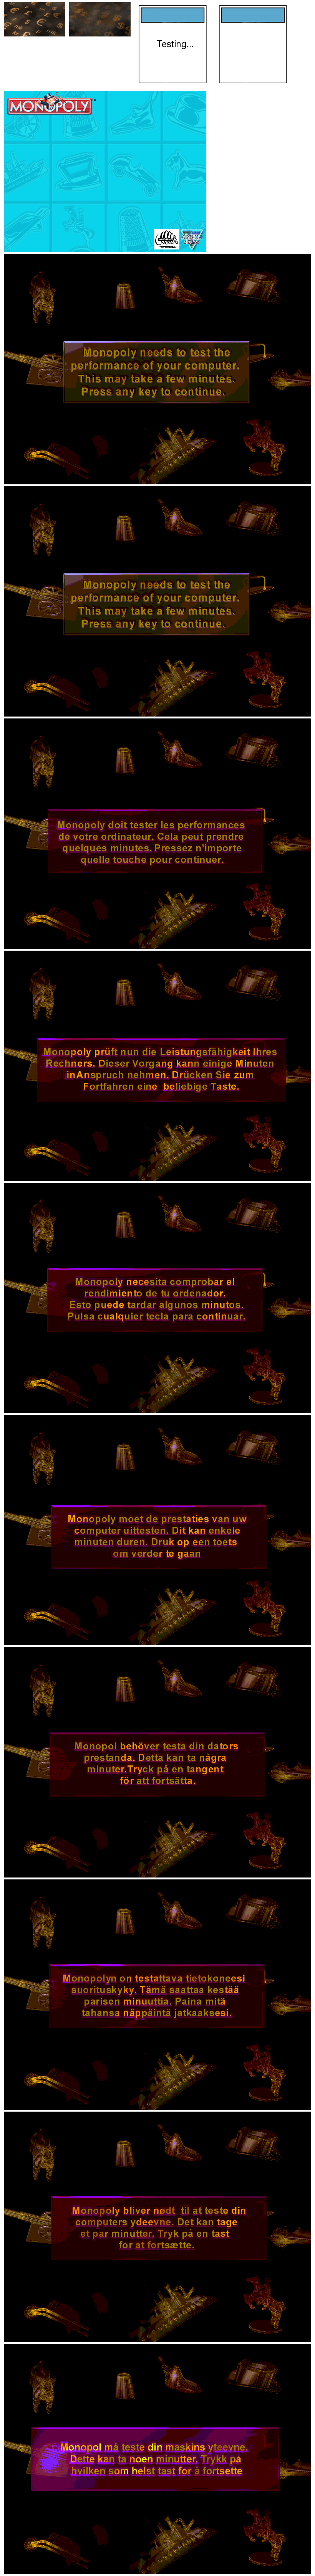 Monopoly (1999) - Setup Images